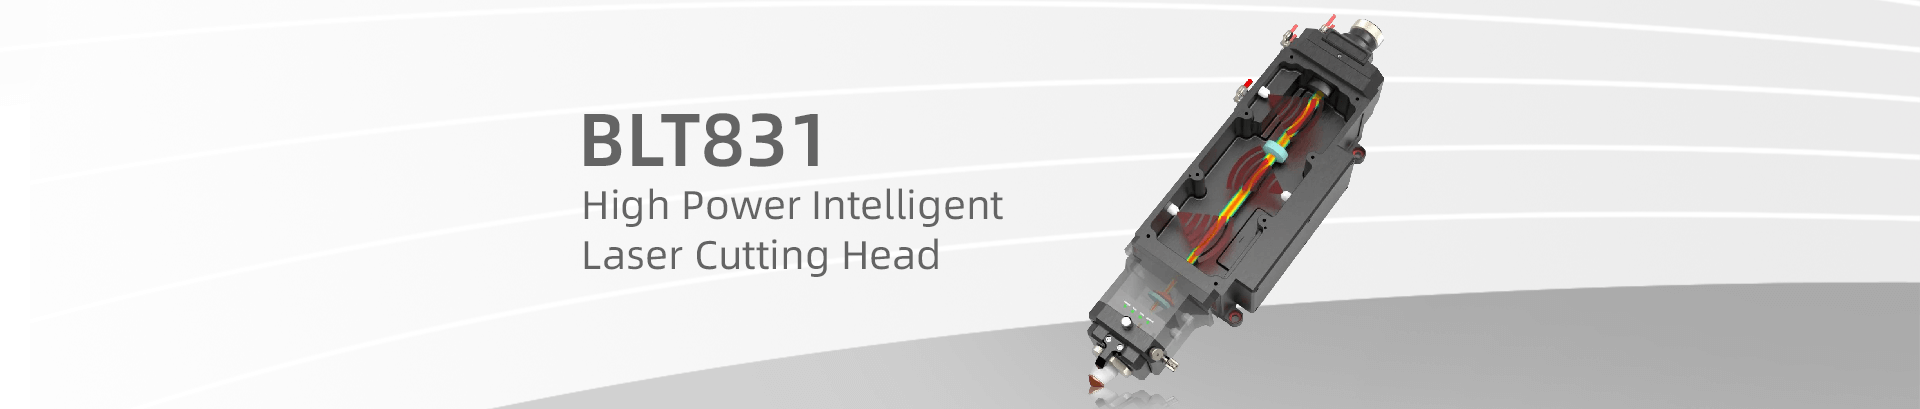 BLT831 high power intelligent laser cutting head